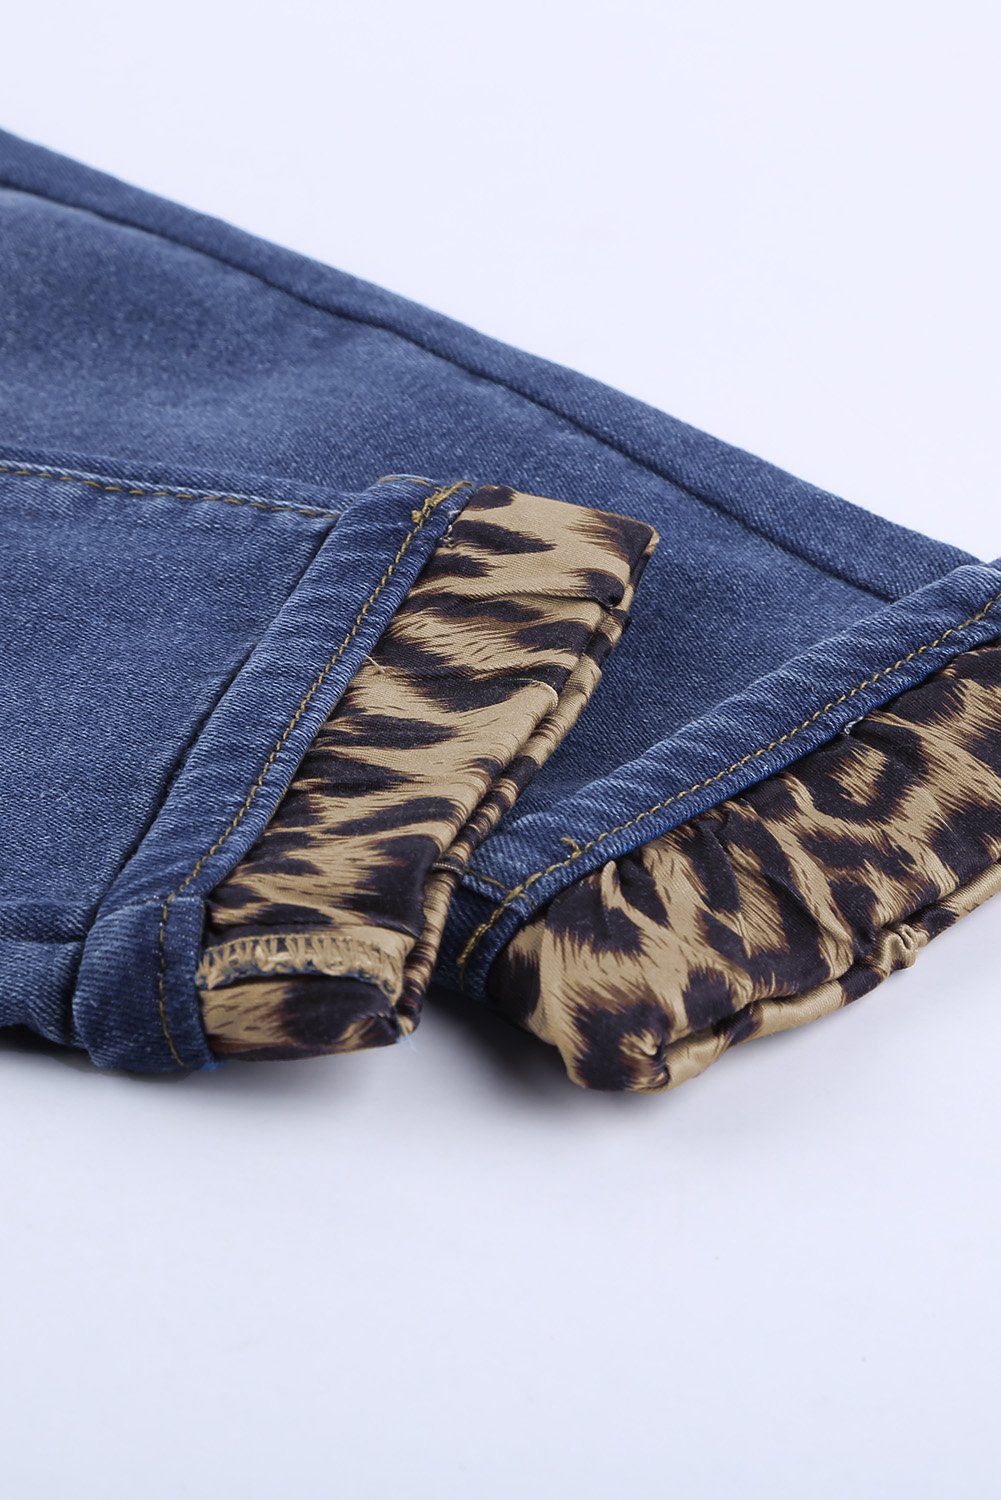 Leopard Patchwork Distressed Jeans Leopard Patchwork Distressed Jeans - M&R CORNERJeans Trendsi